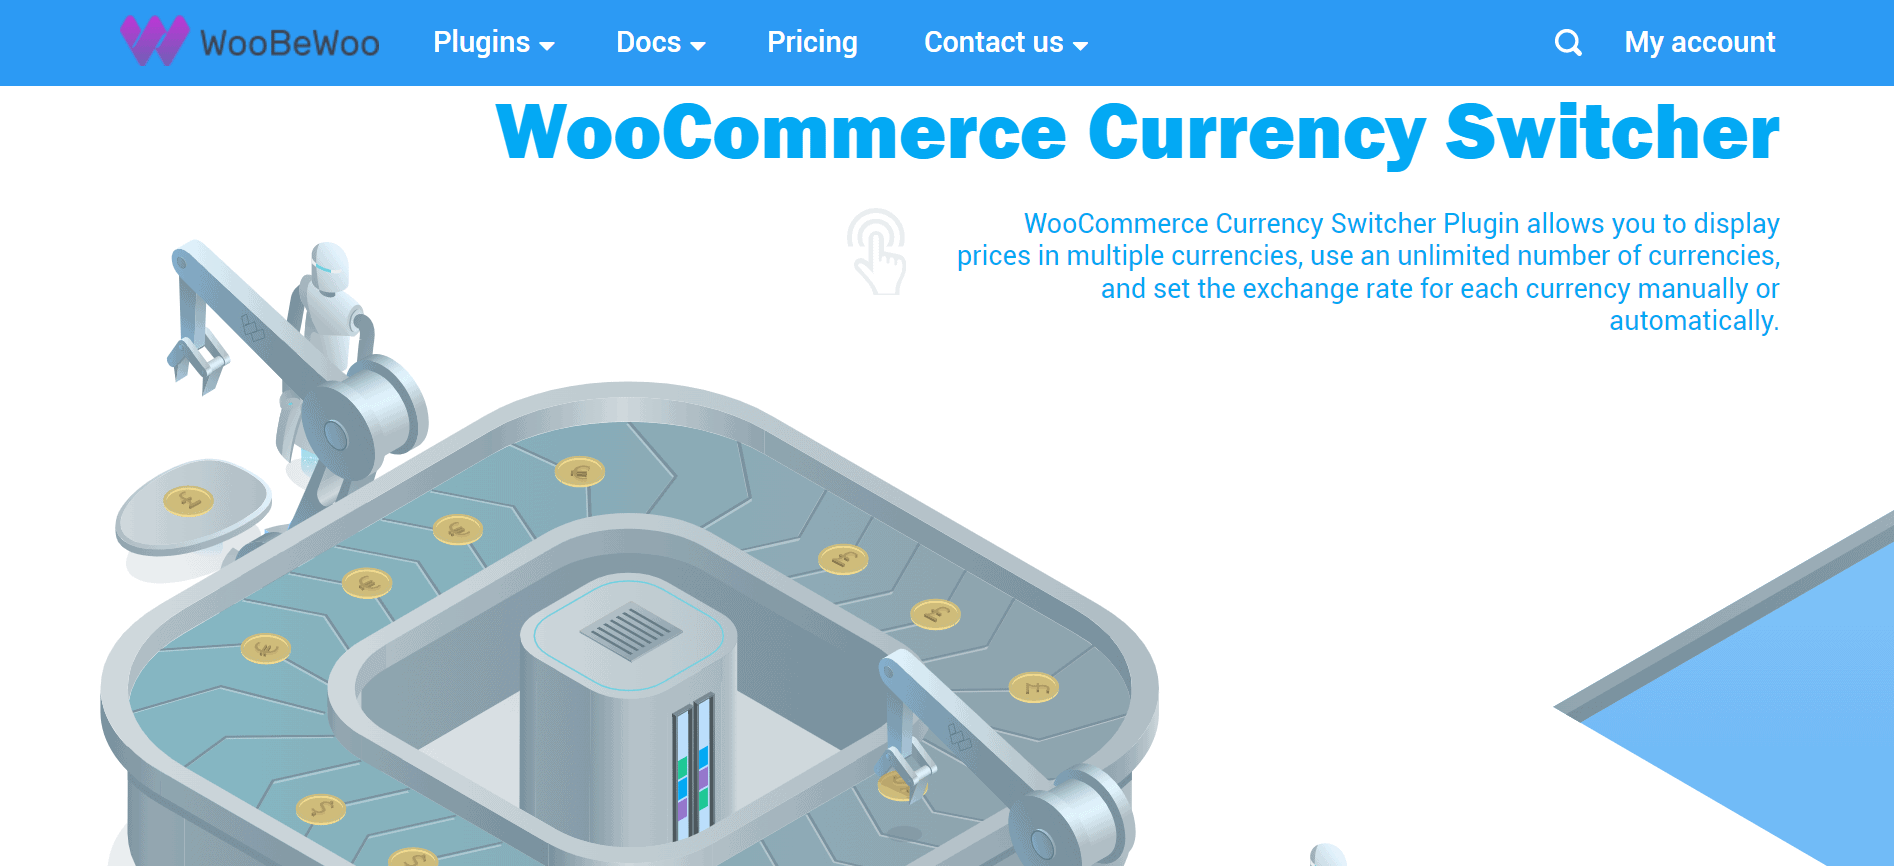 WooBeWoo's WooCommerce Currency Switcher: